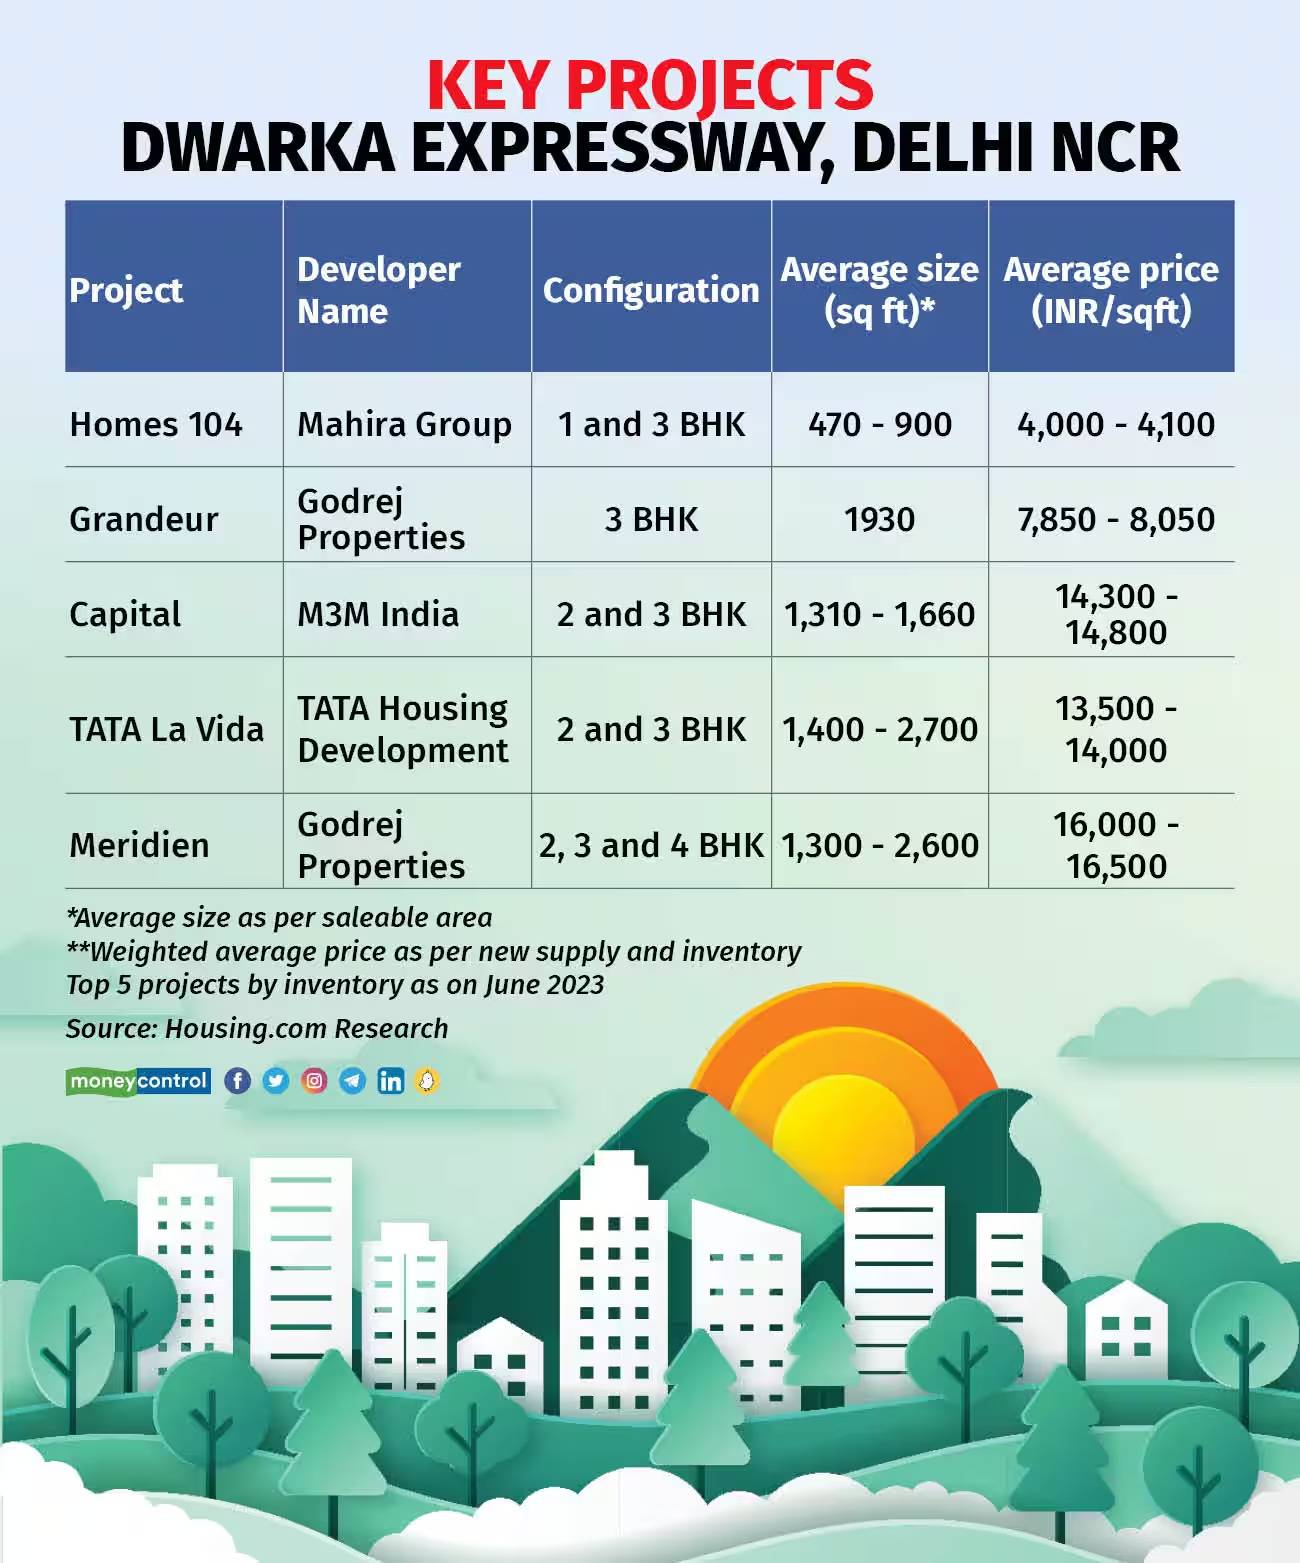 key projects dwarka expressway, Delhi ncr